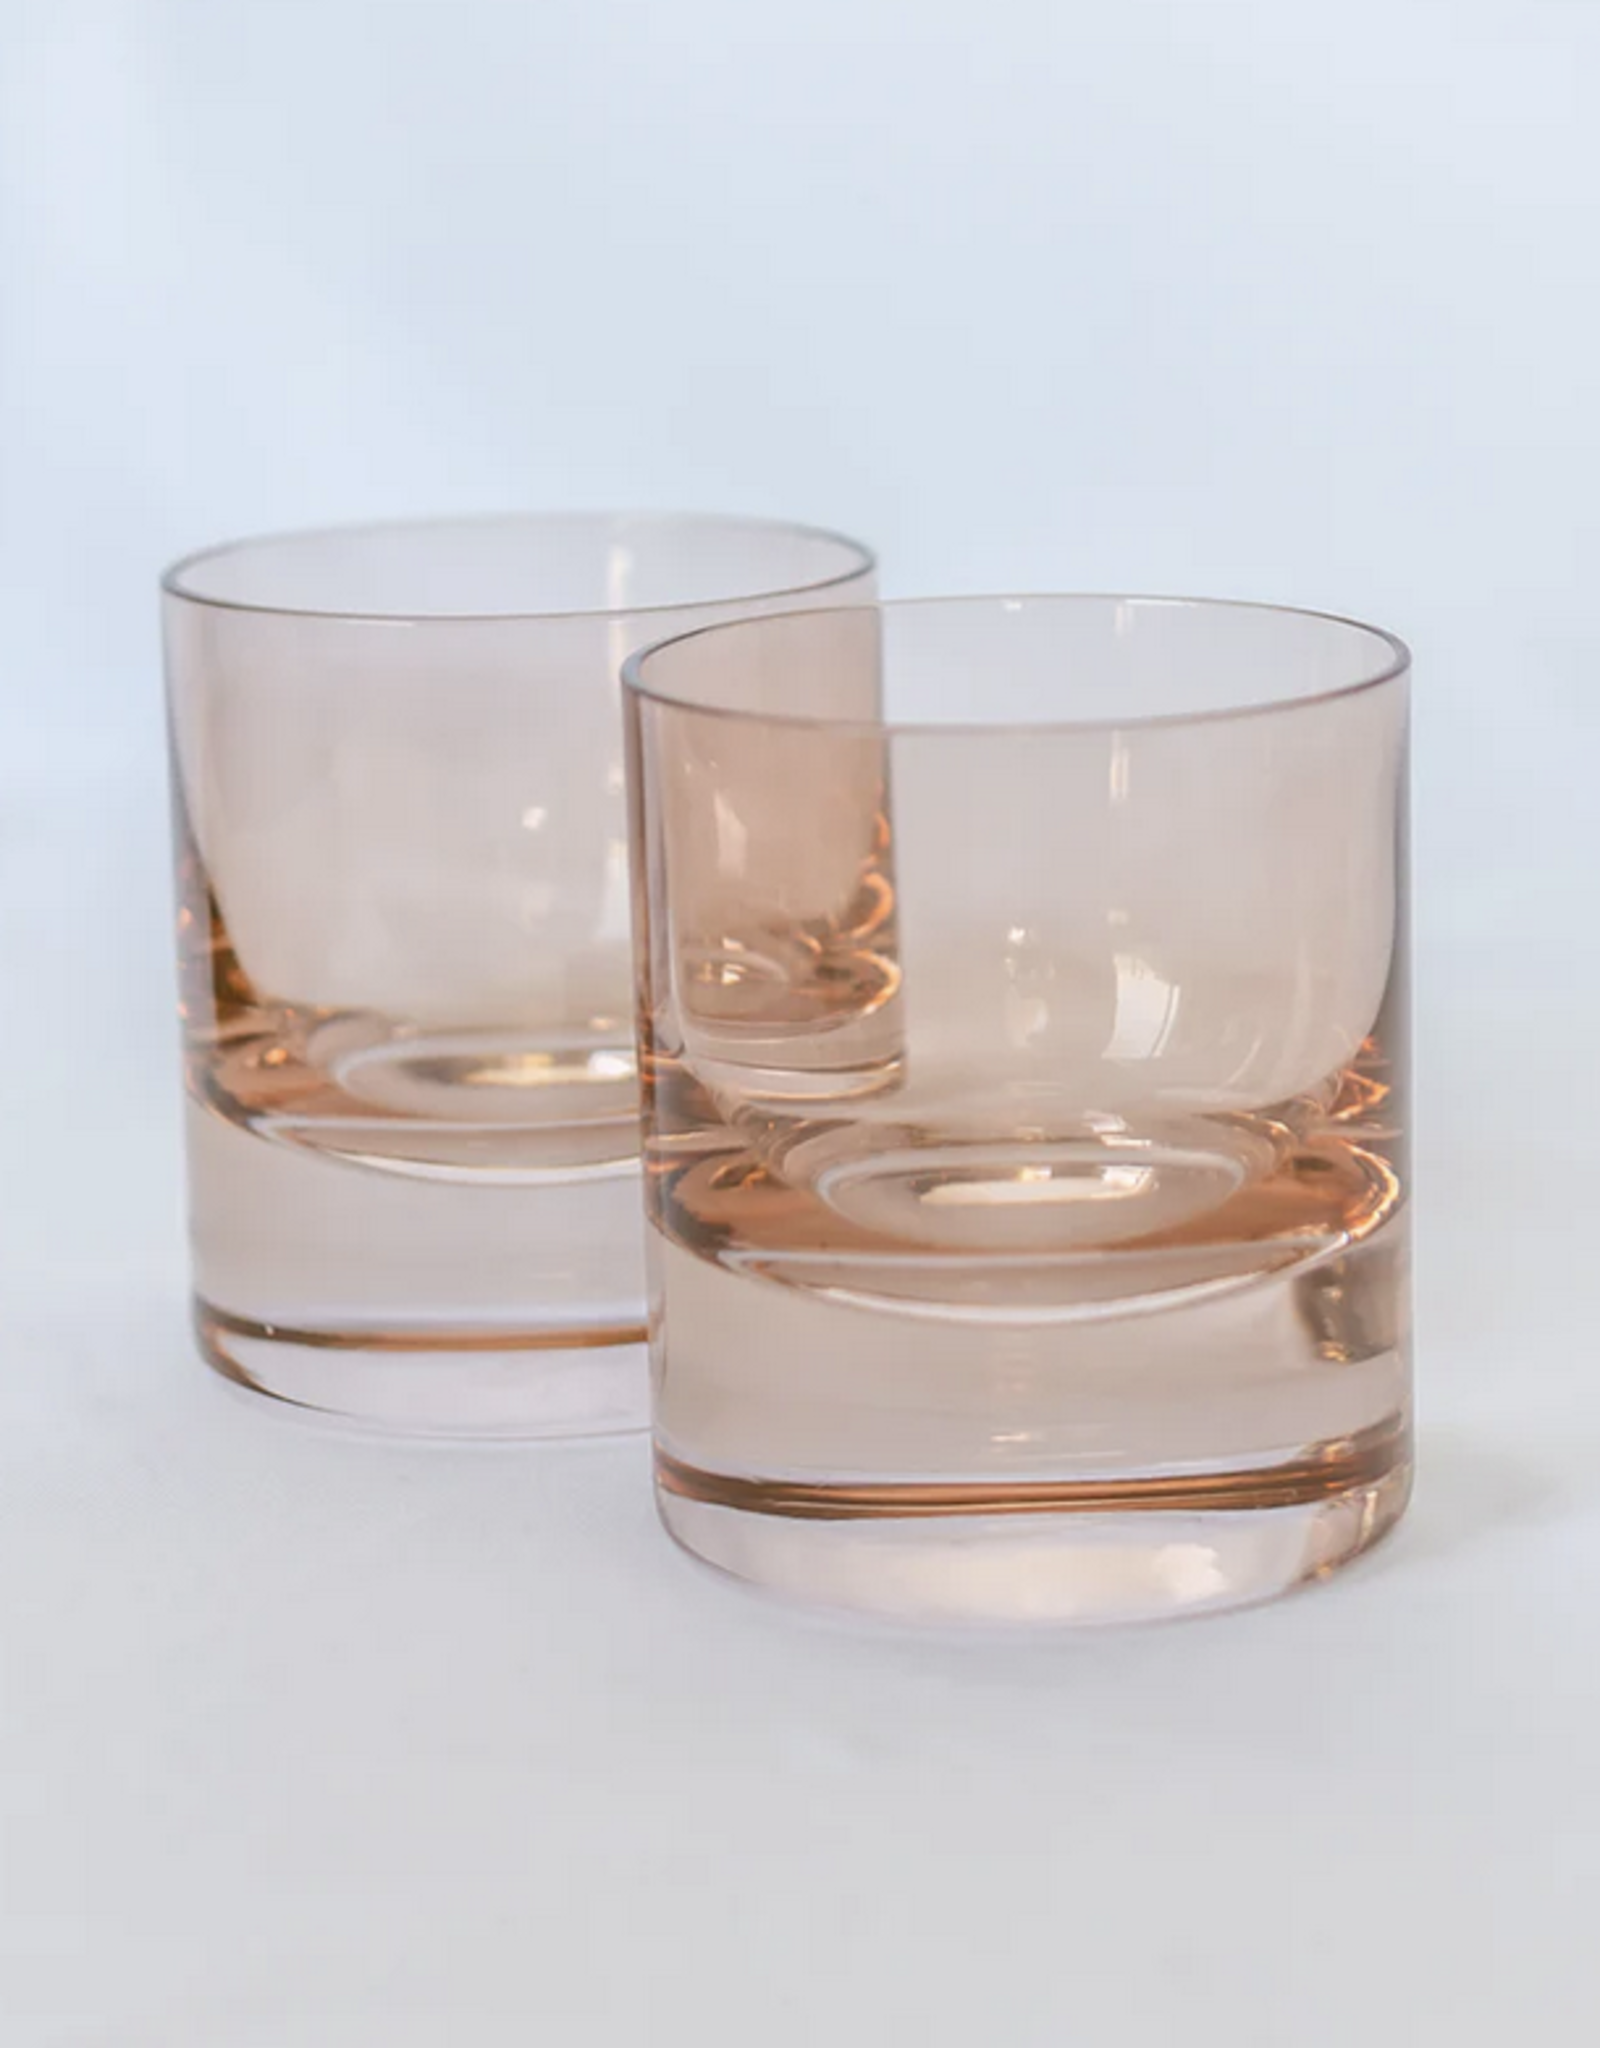 Estelle Colored Glassware Estelle Colored Rocks Glasses Set of 2 - Blush Pink